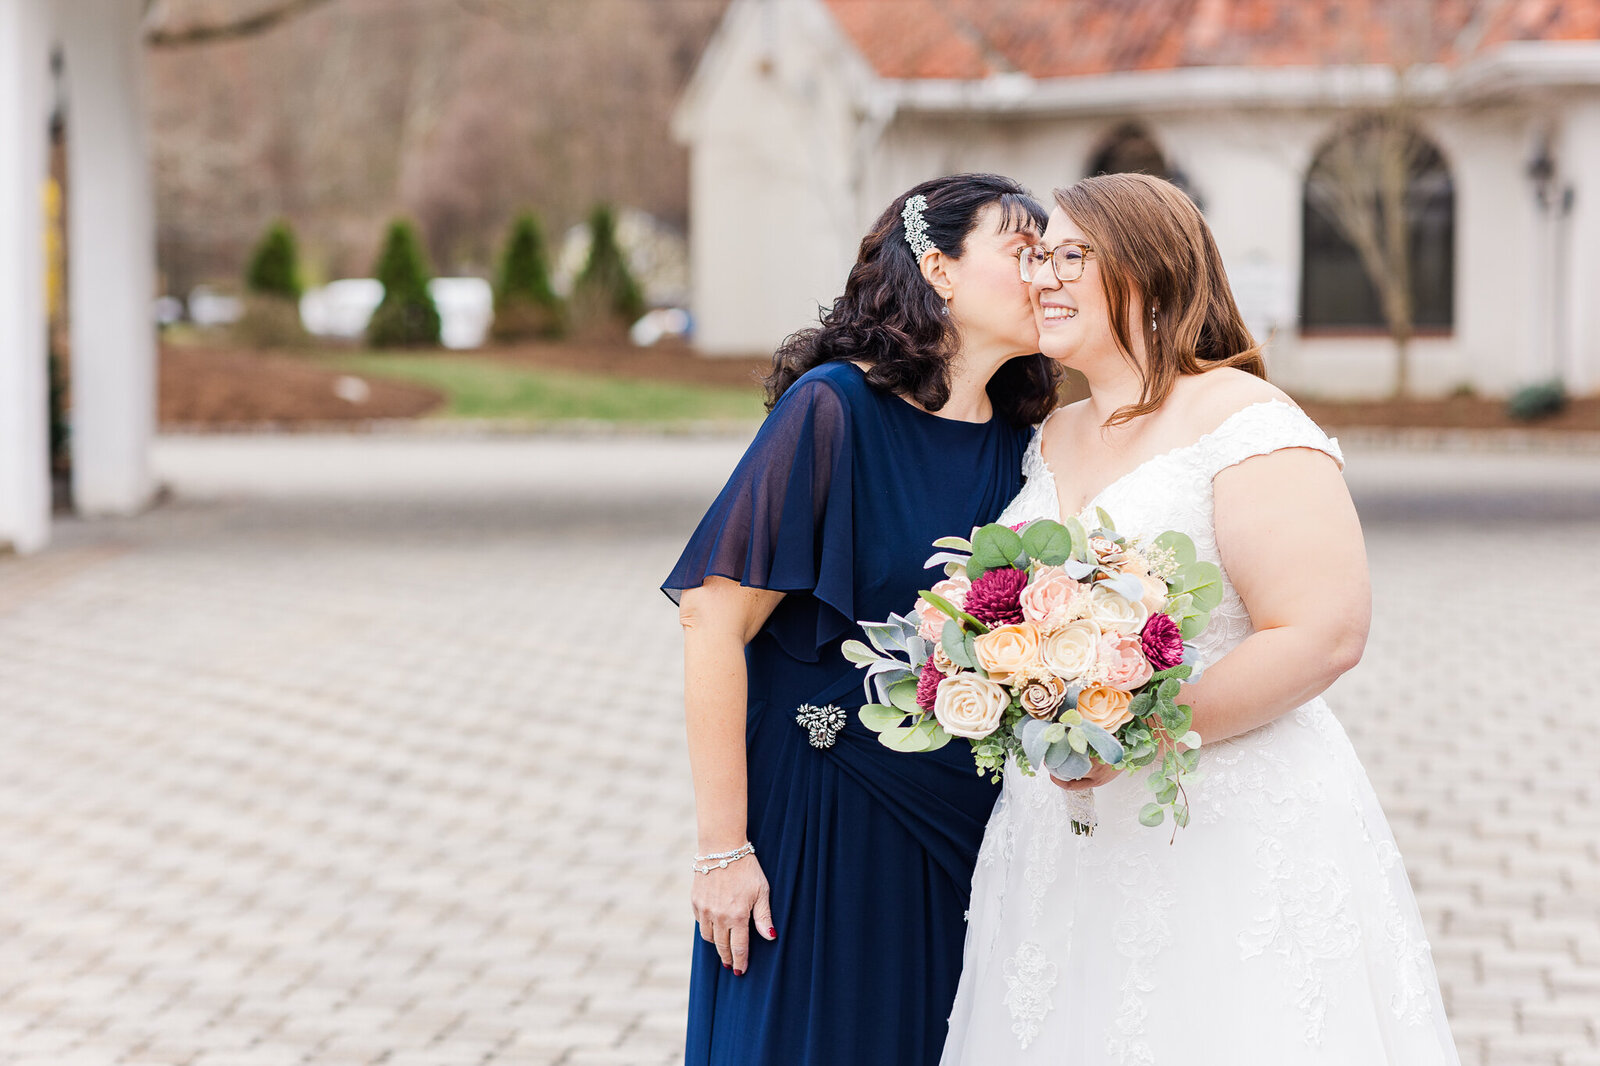 Mom kissing bride on cheek on wedding day